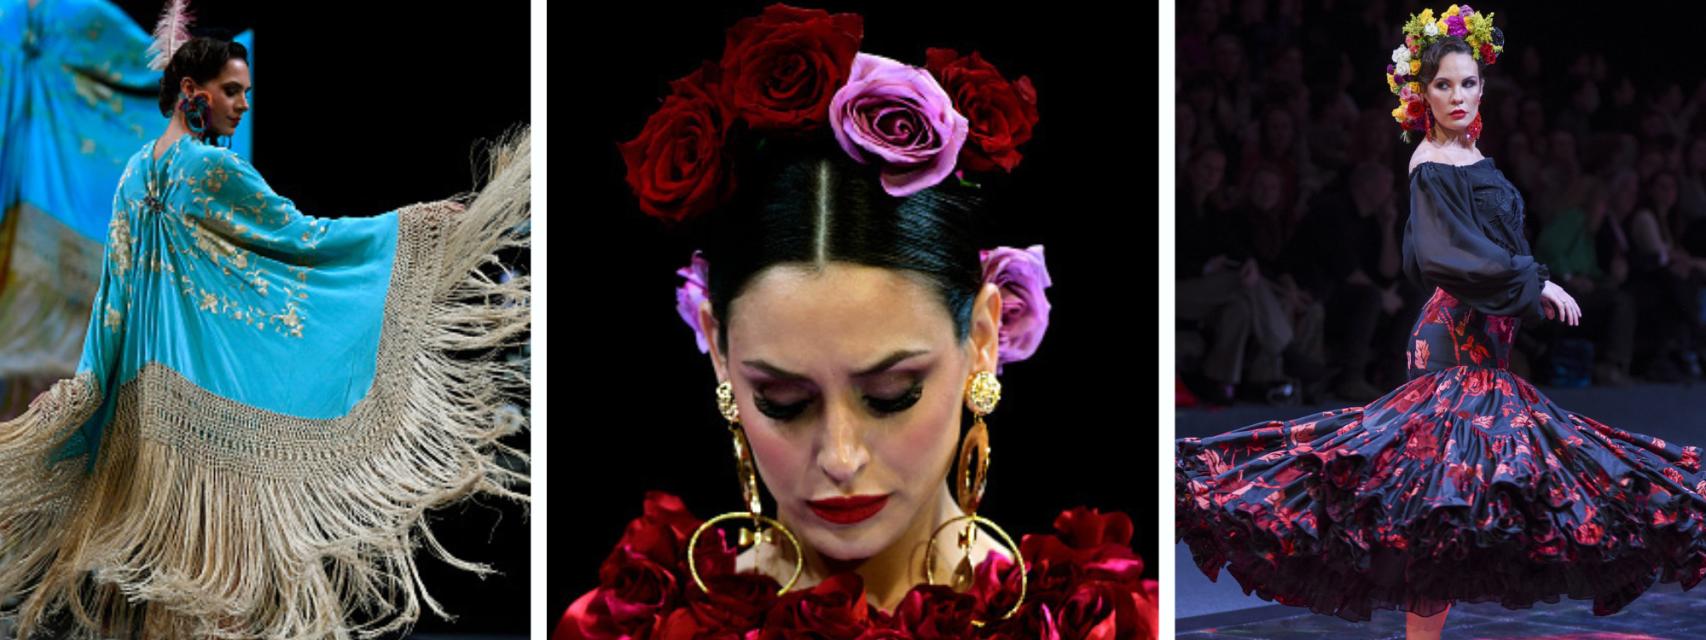 Tendencias Flamencas archivos - MDMQSF Tendencias flamencas